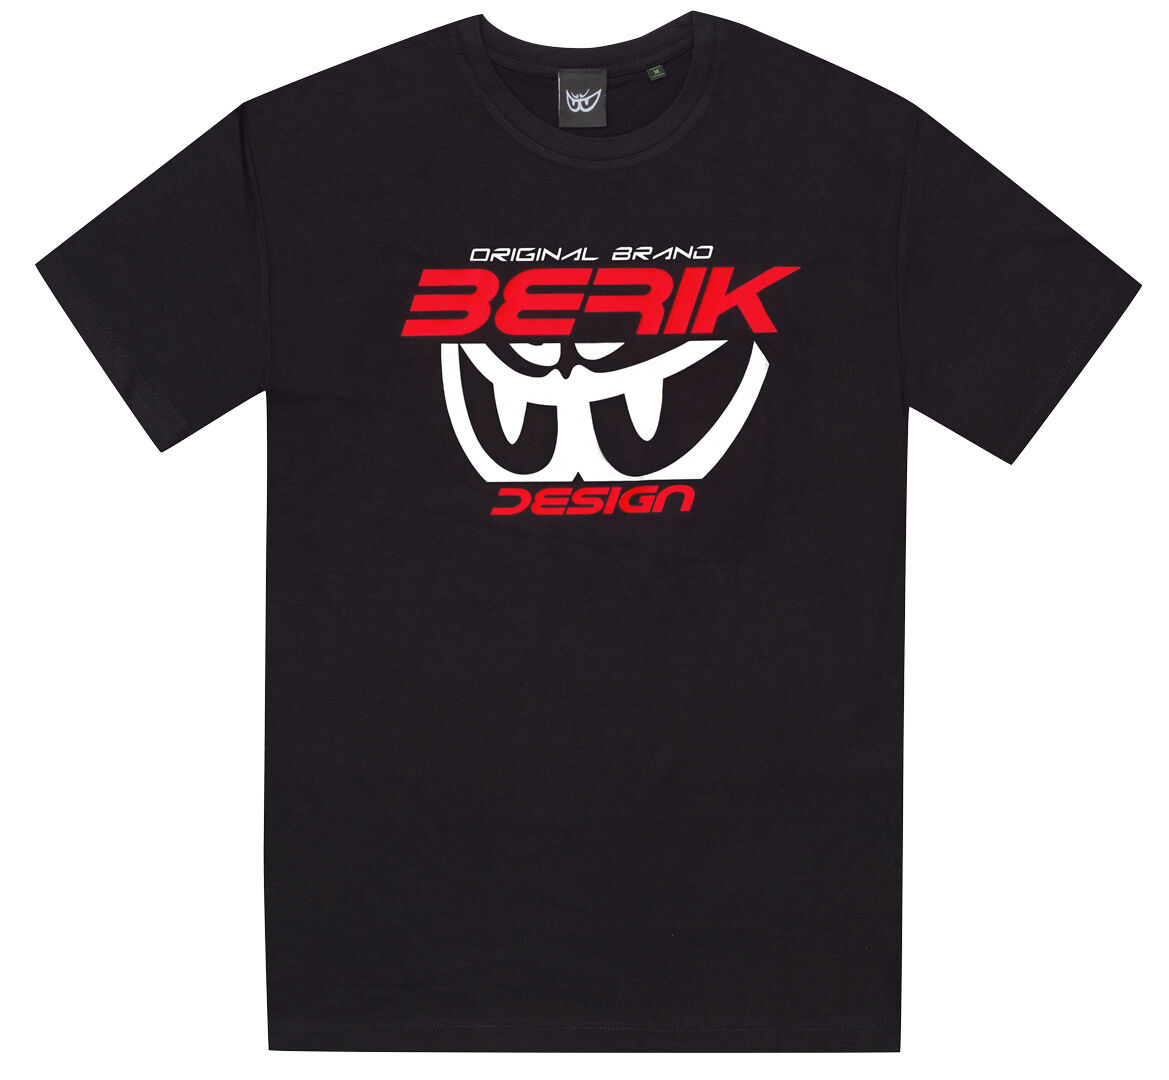 Berik The Big Eye Camiseta - Negro Blanco Rojo (S)